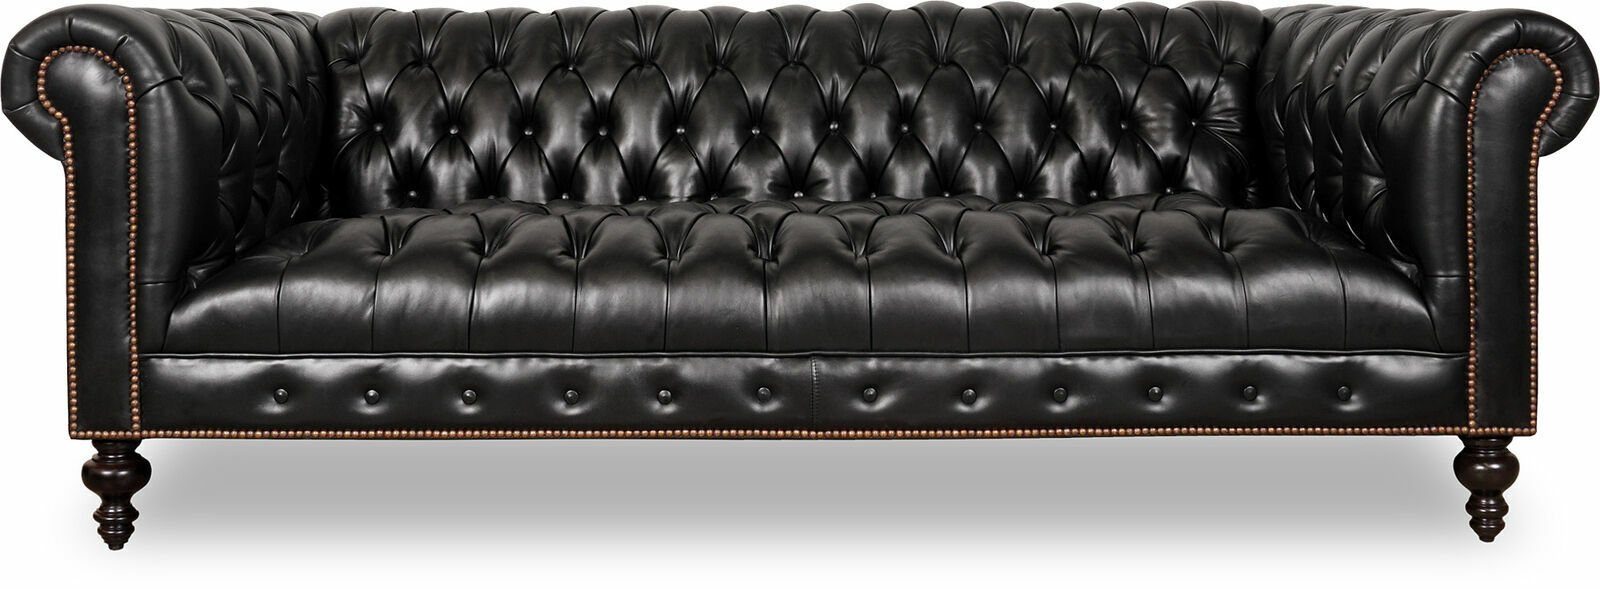 1 Sofa Leder JVmoebel Schwarz Leder Teile, Chesterfield Europa in Made Couch 100% England Chesterfield-Sofa Sofort,